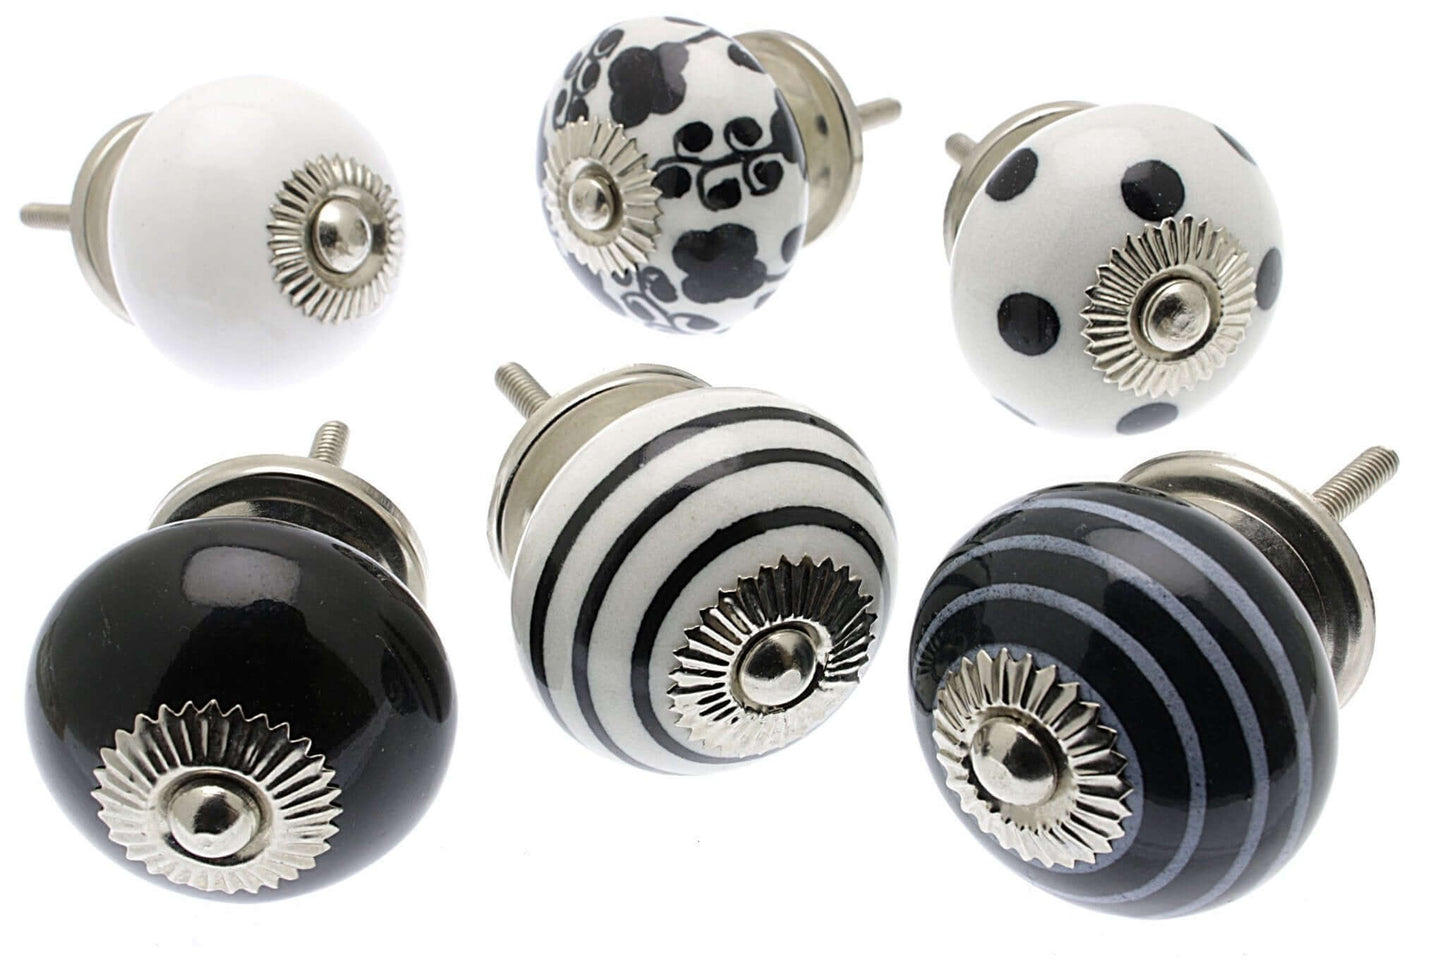 Ceramic Cupboard Knobs - Set Of 6 Monochrome Black And White Round Ceramic Knobs (MG-222)